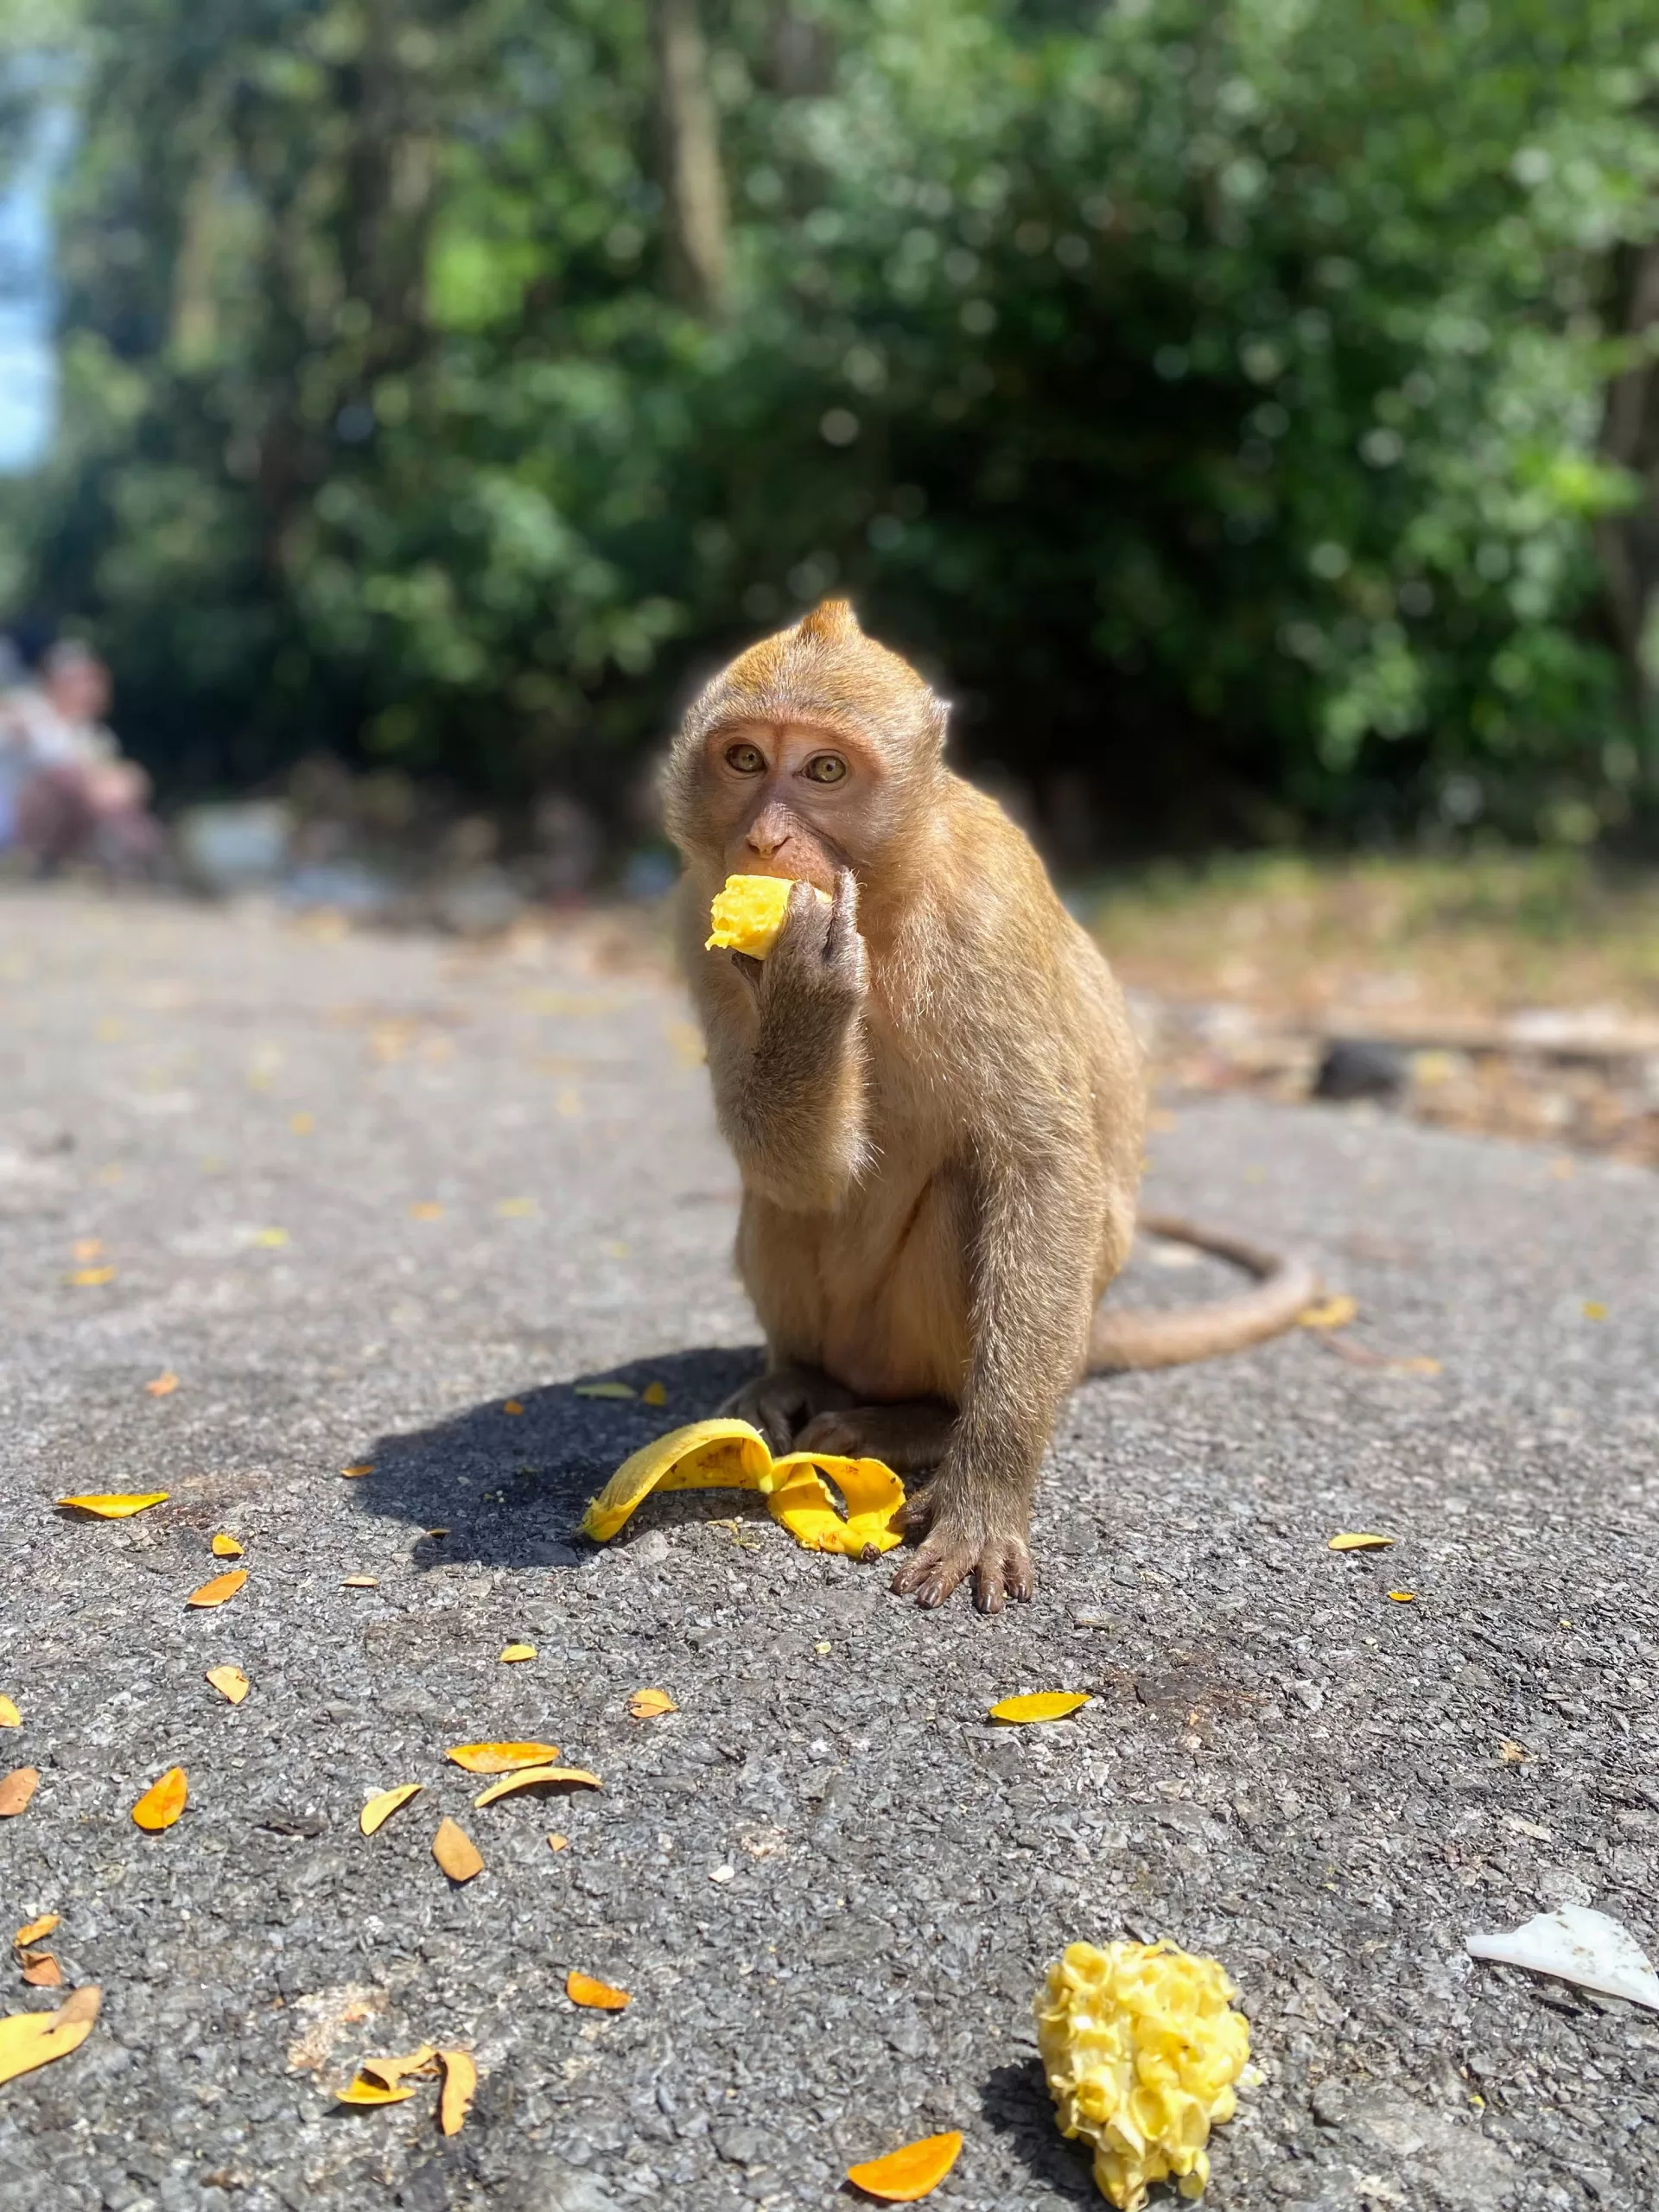 A cute monkey sitting on an asphalt surface and eating banana.